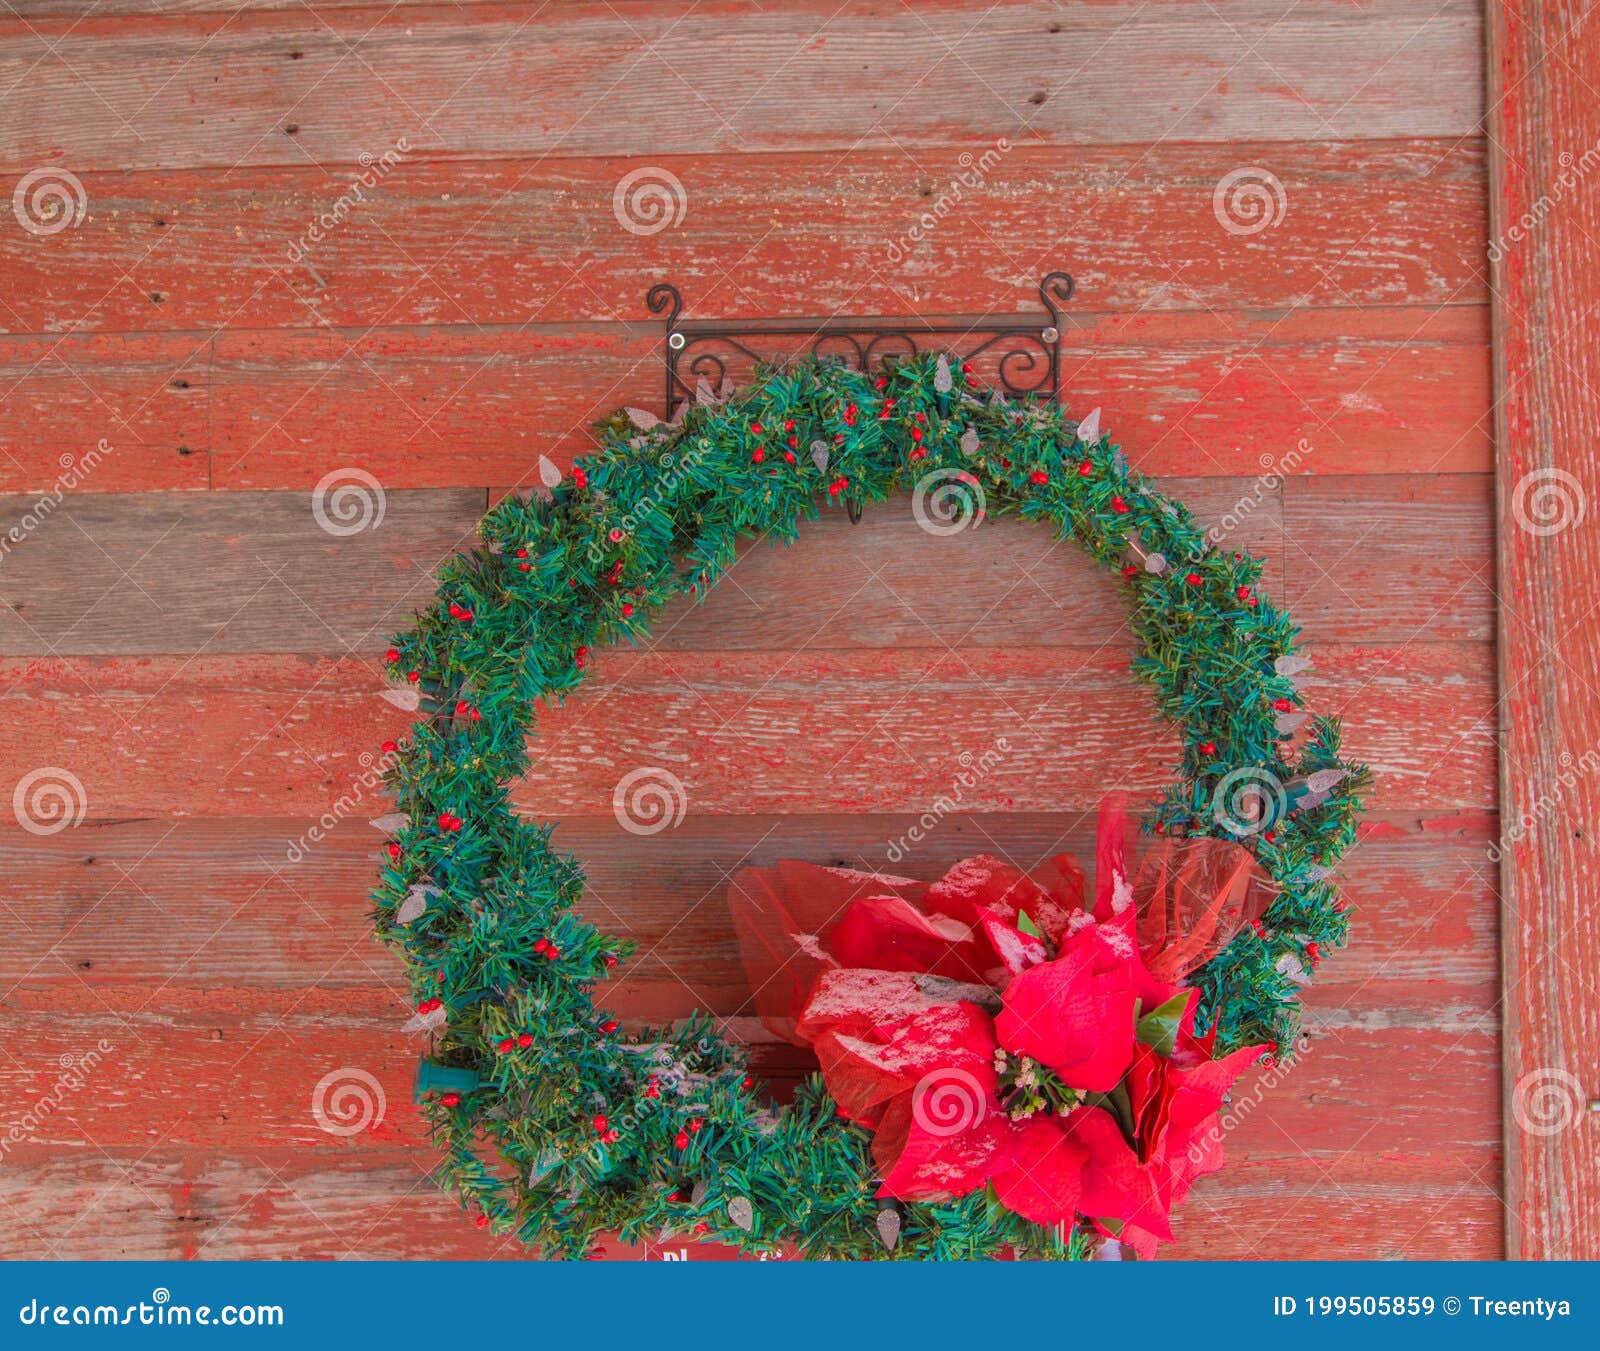 christmas wreath hanging on a rustic red door